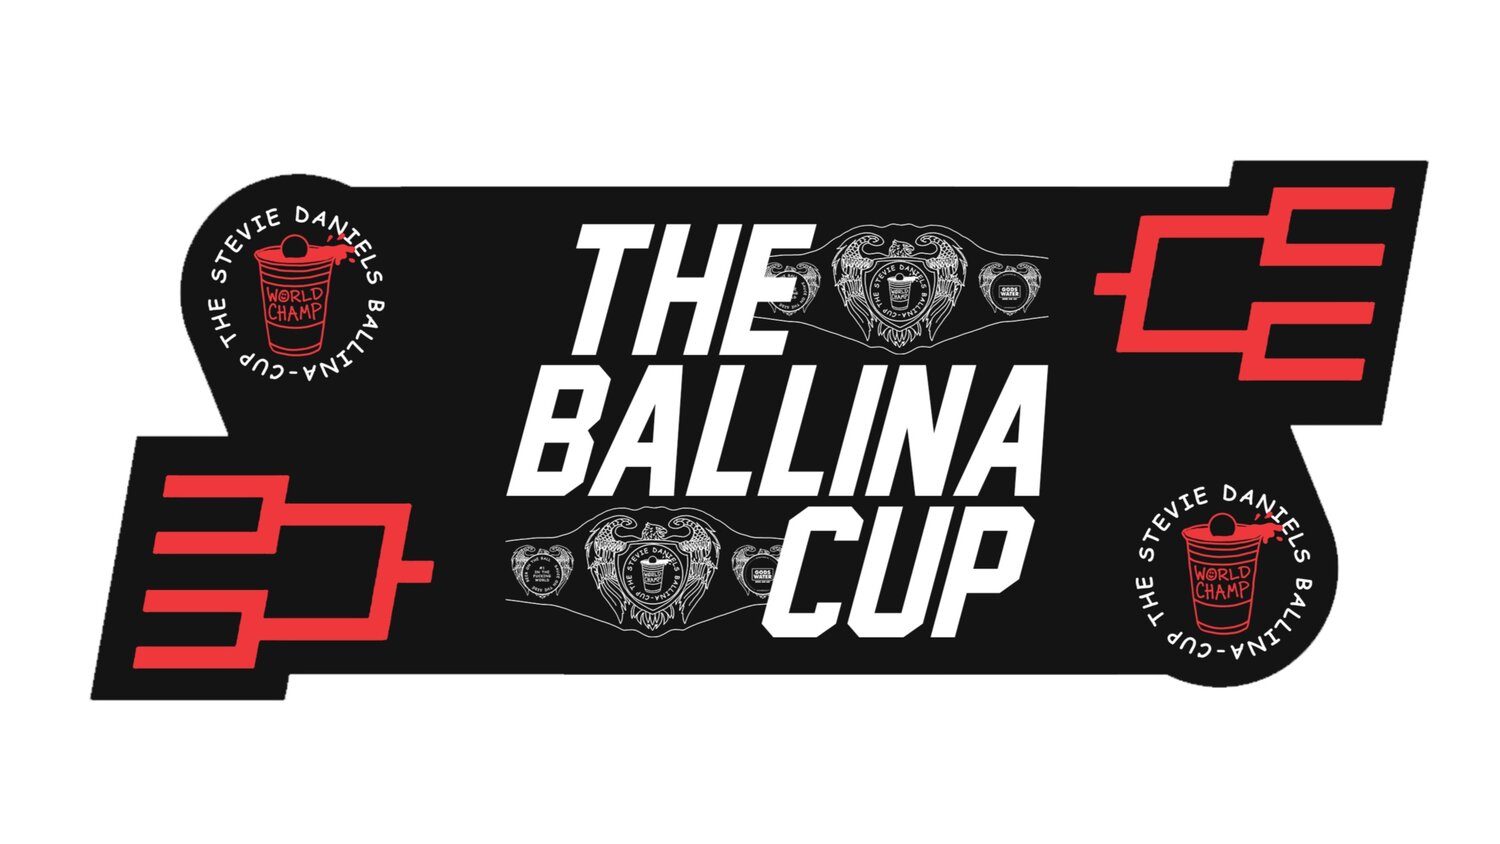 Ballina Cup